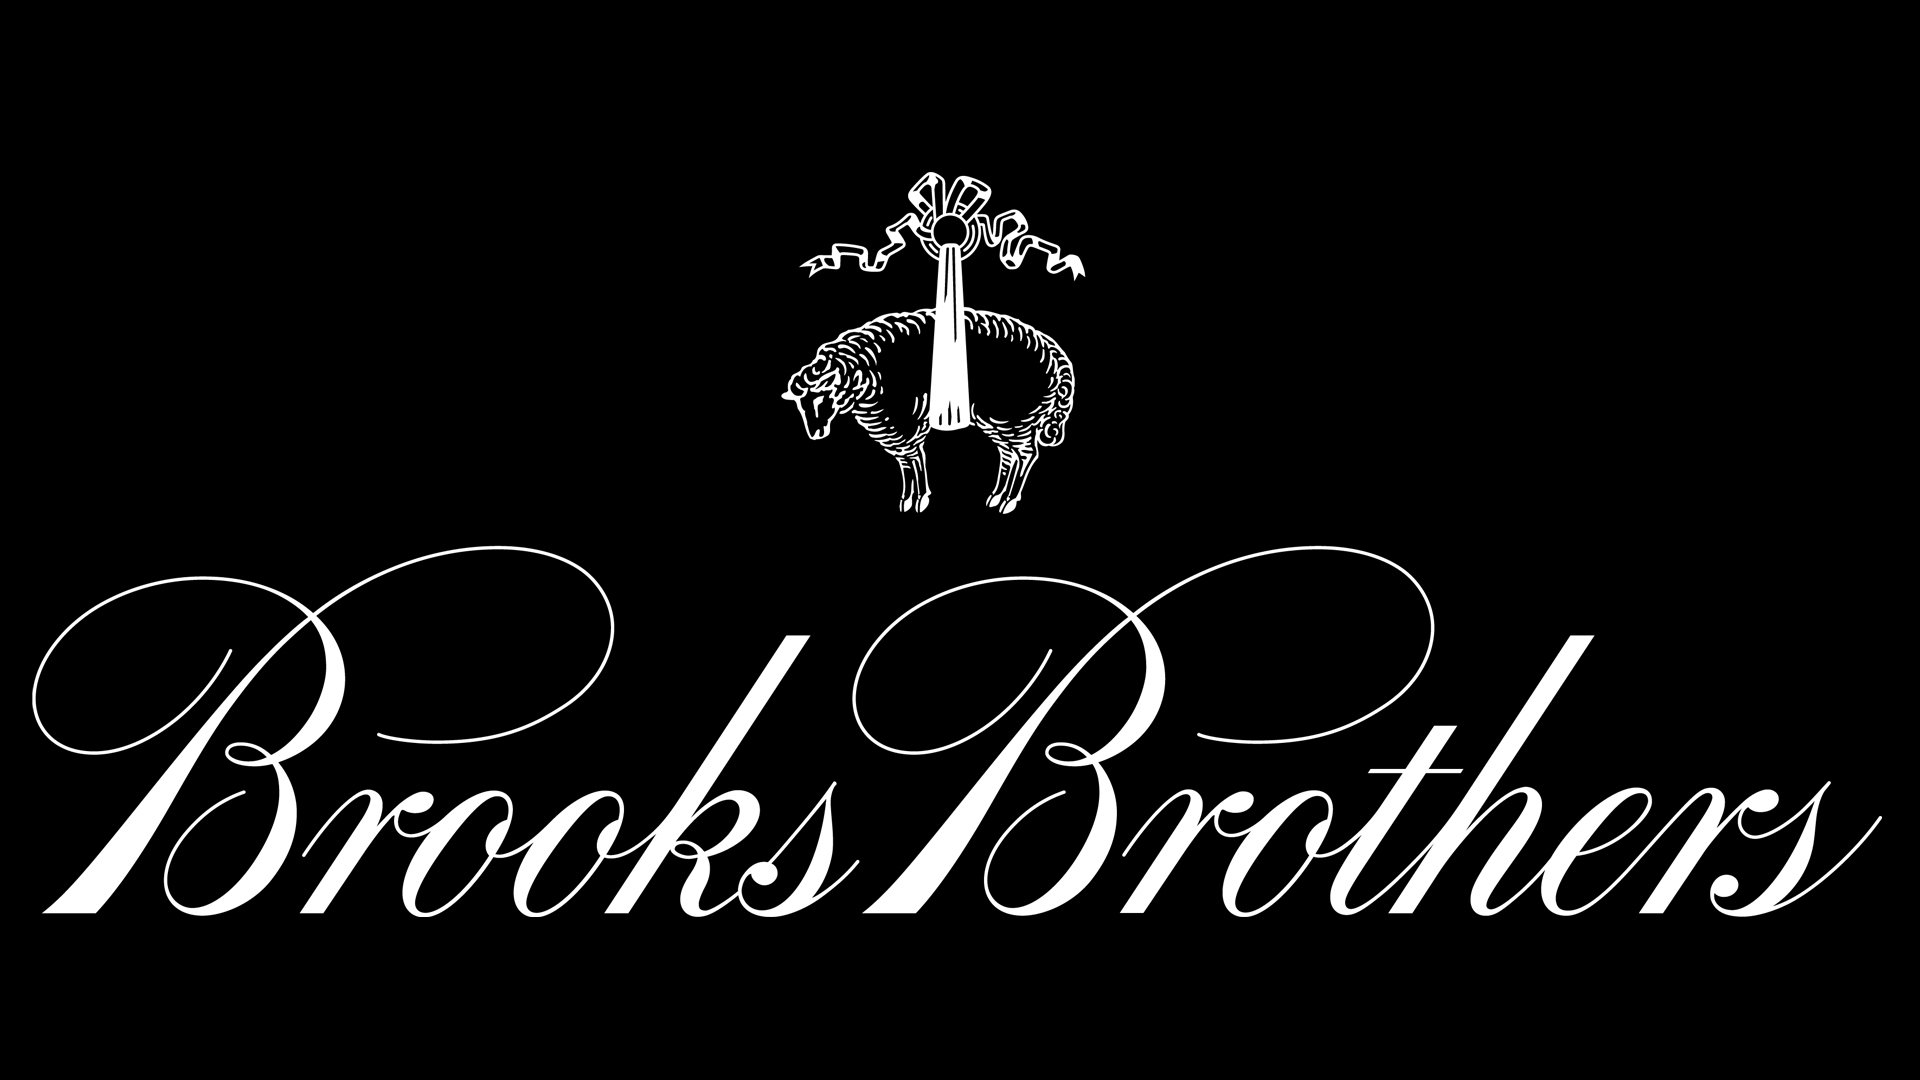 brooks brothers emblem